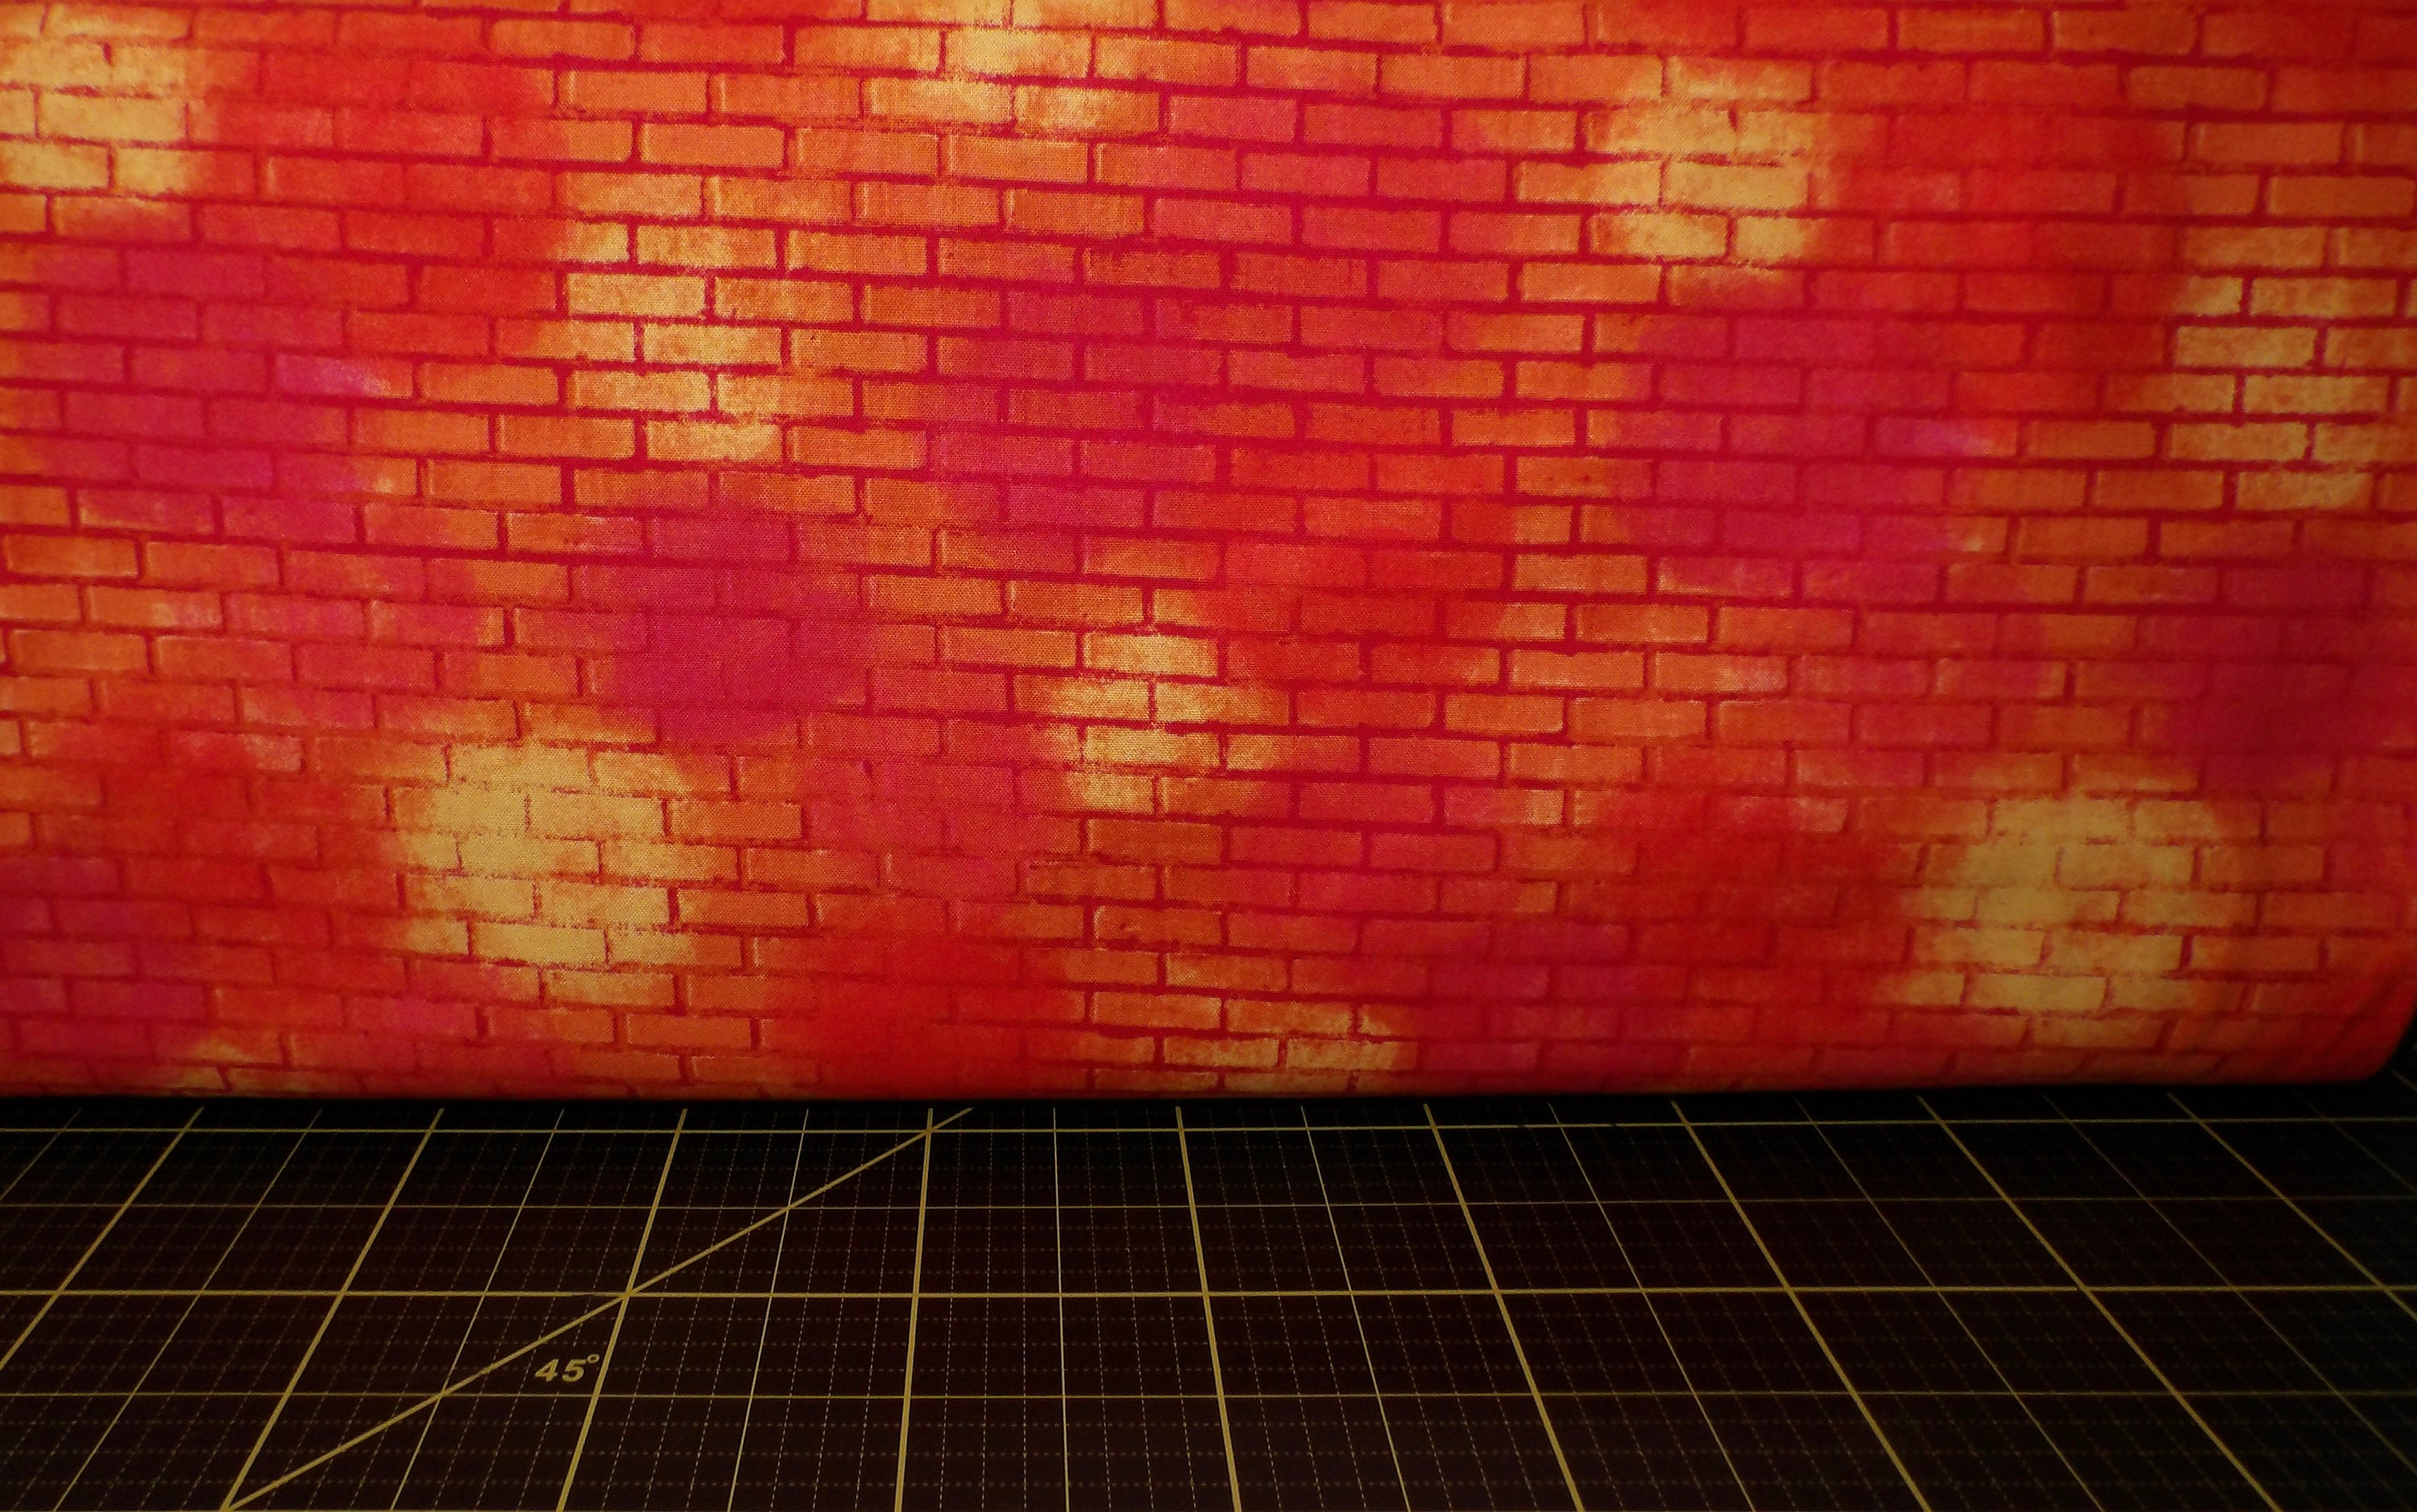 Cotton Landscape Medley Bricks Red Brick Wall Miniature 1 x 0.375 Bricks  Cotton Fabric Print by the Yard (367-red)